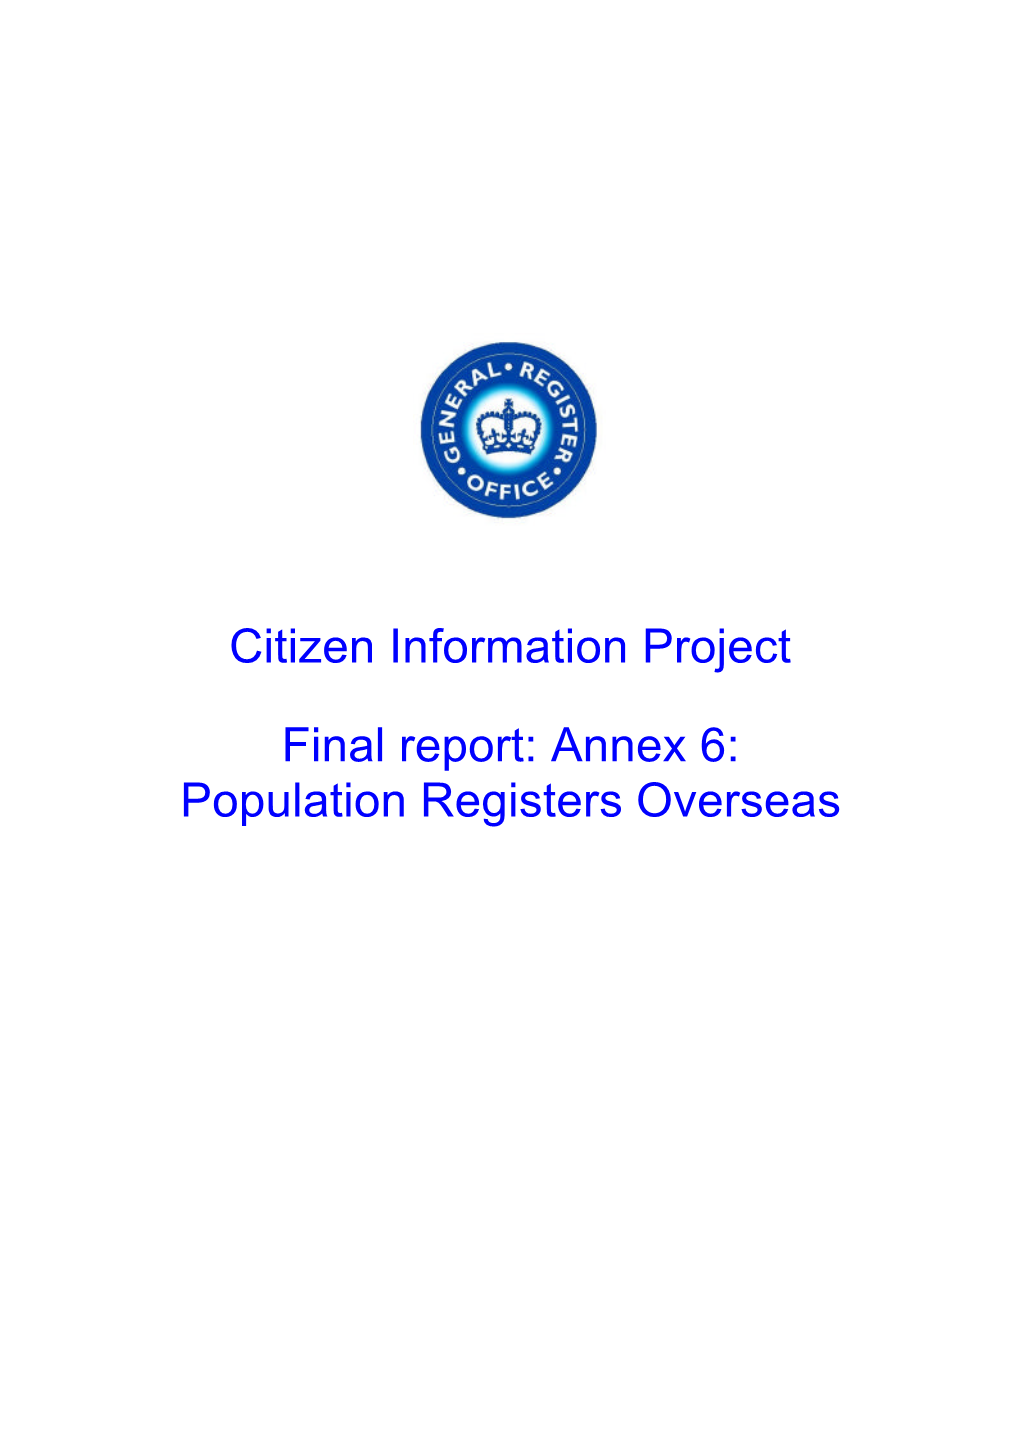 Citizen Information Project Final Report: Annex 6: Population Registers Overseas